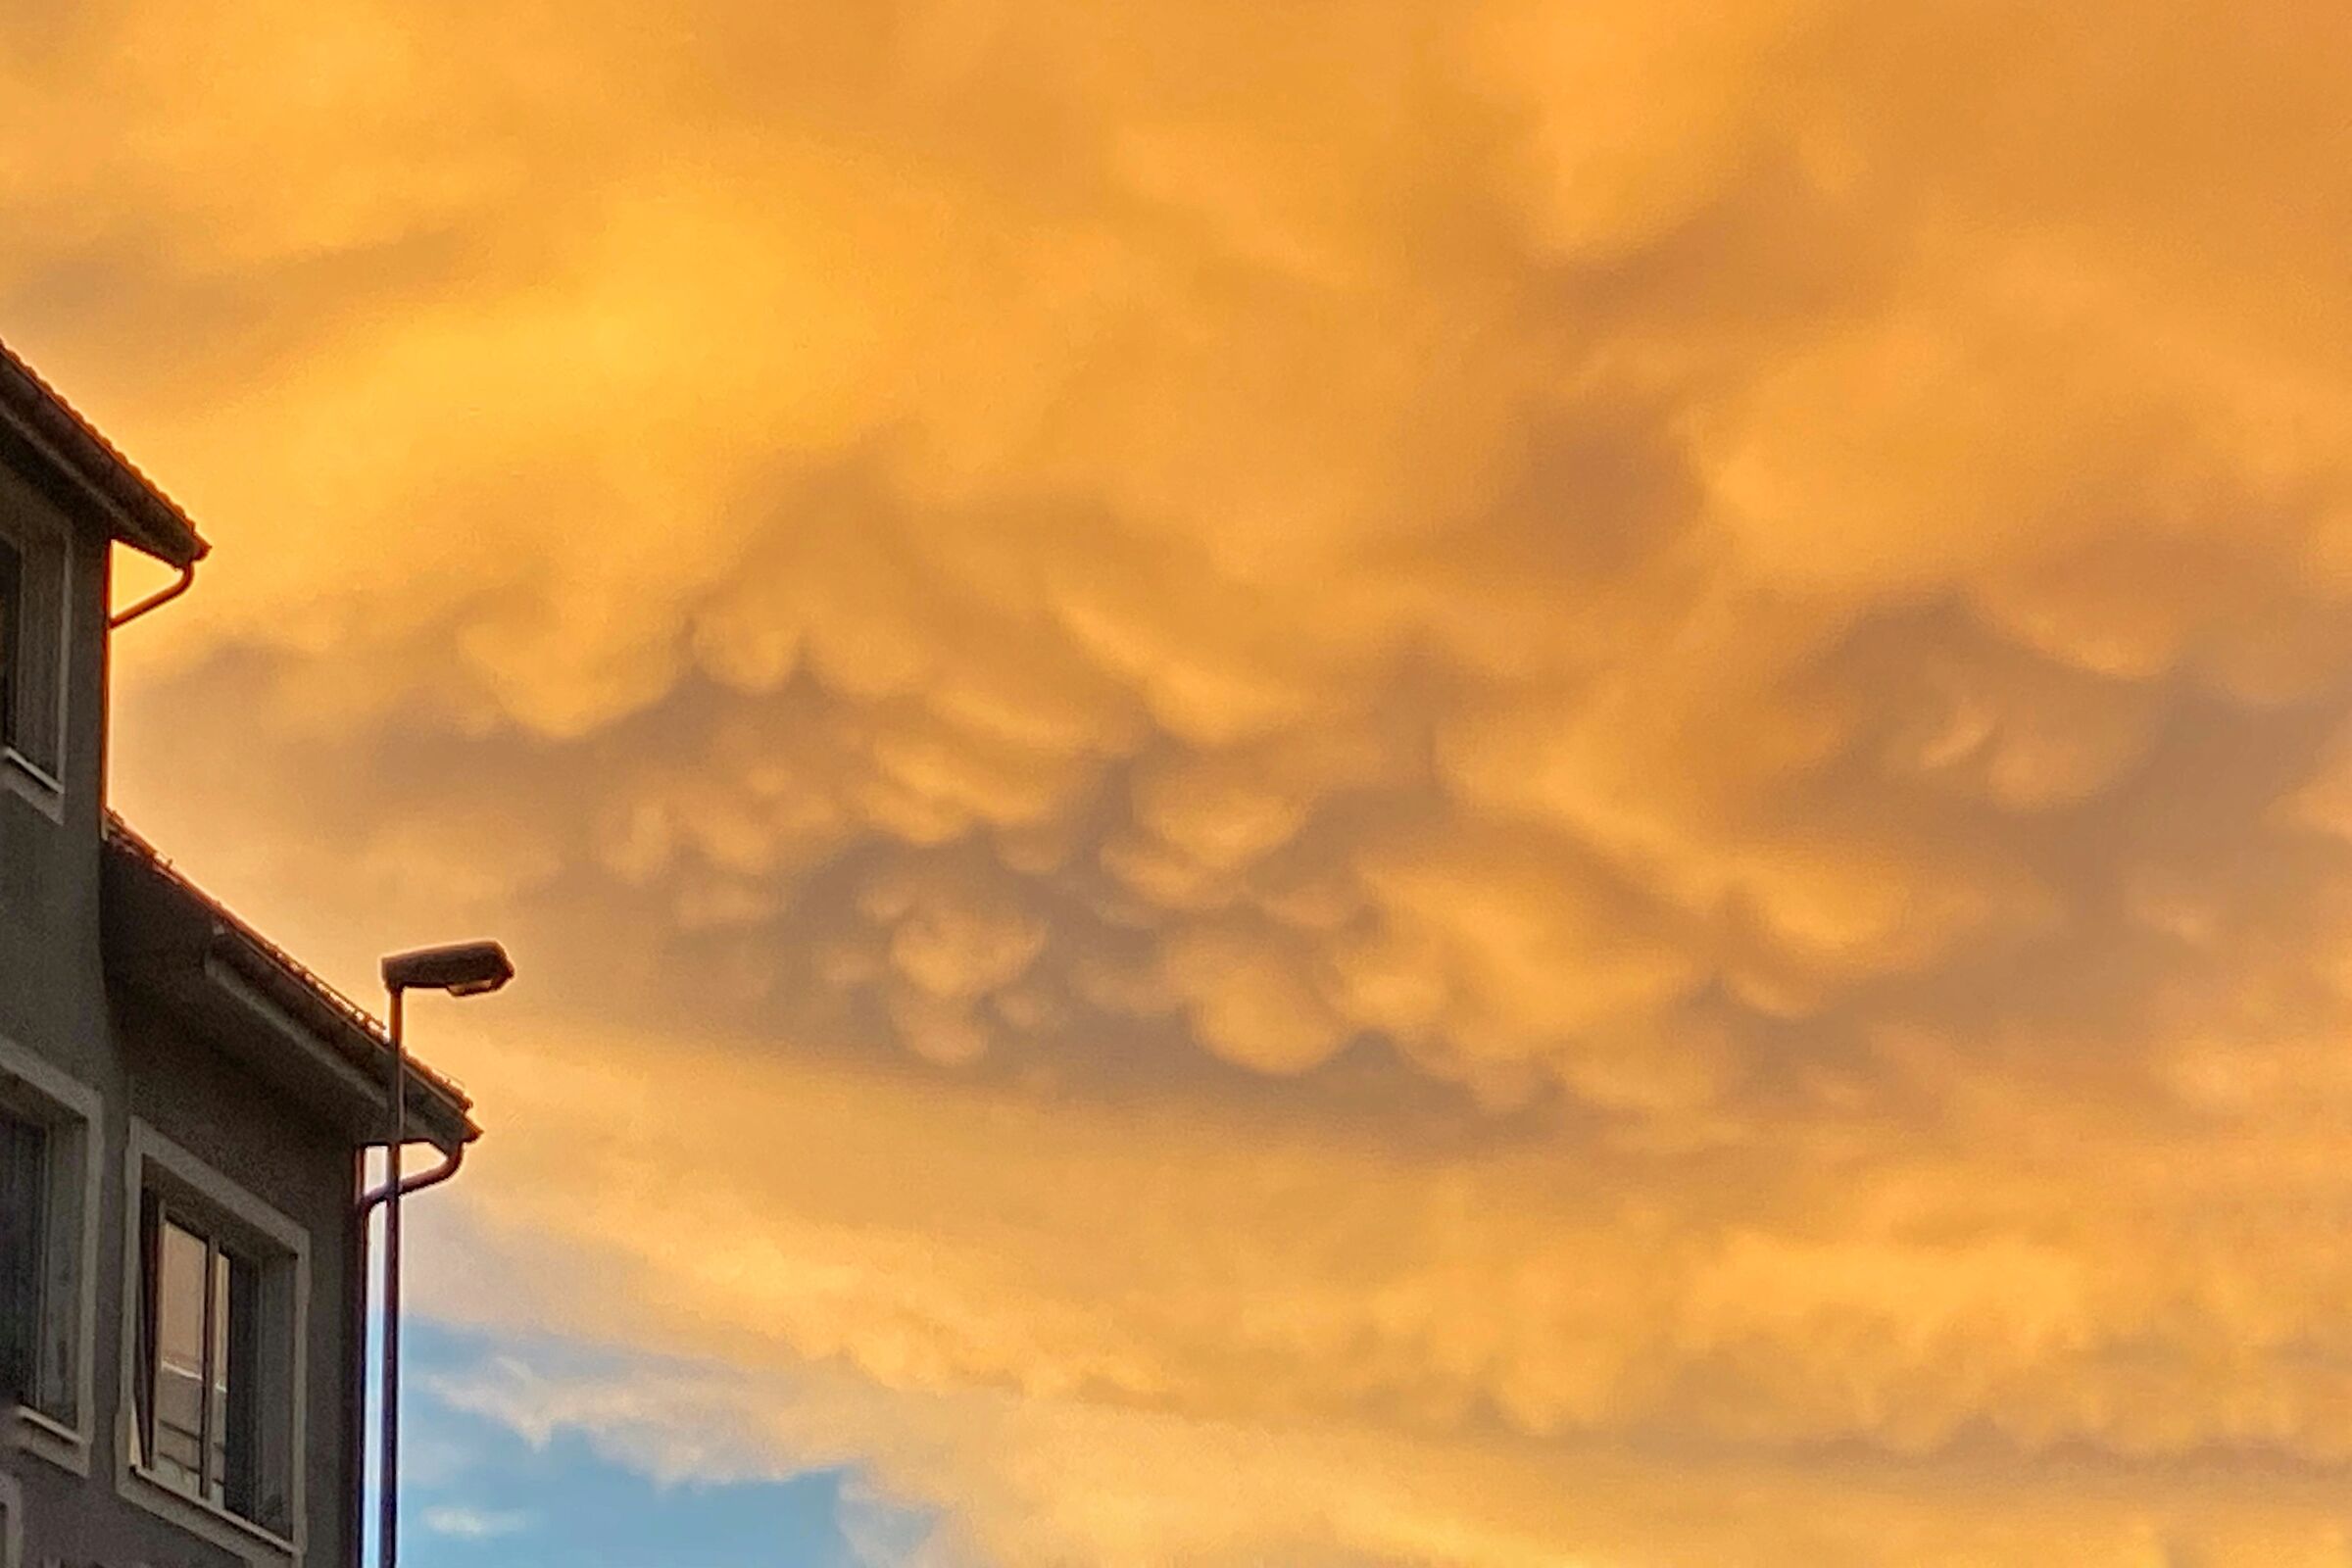 'Mammatus' clouds at sunset, Ste-Croix (VD) - Switzerland...